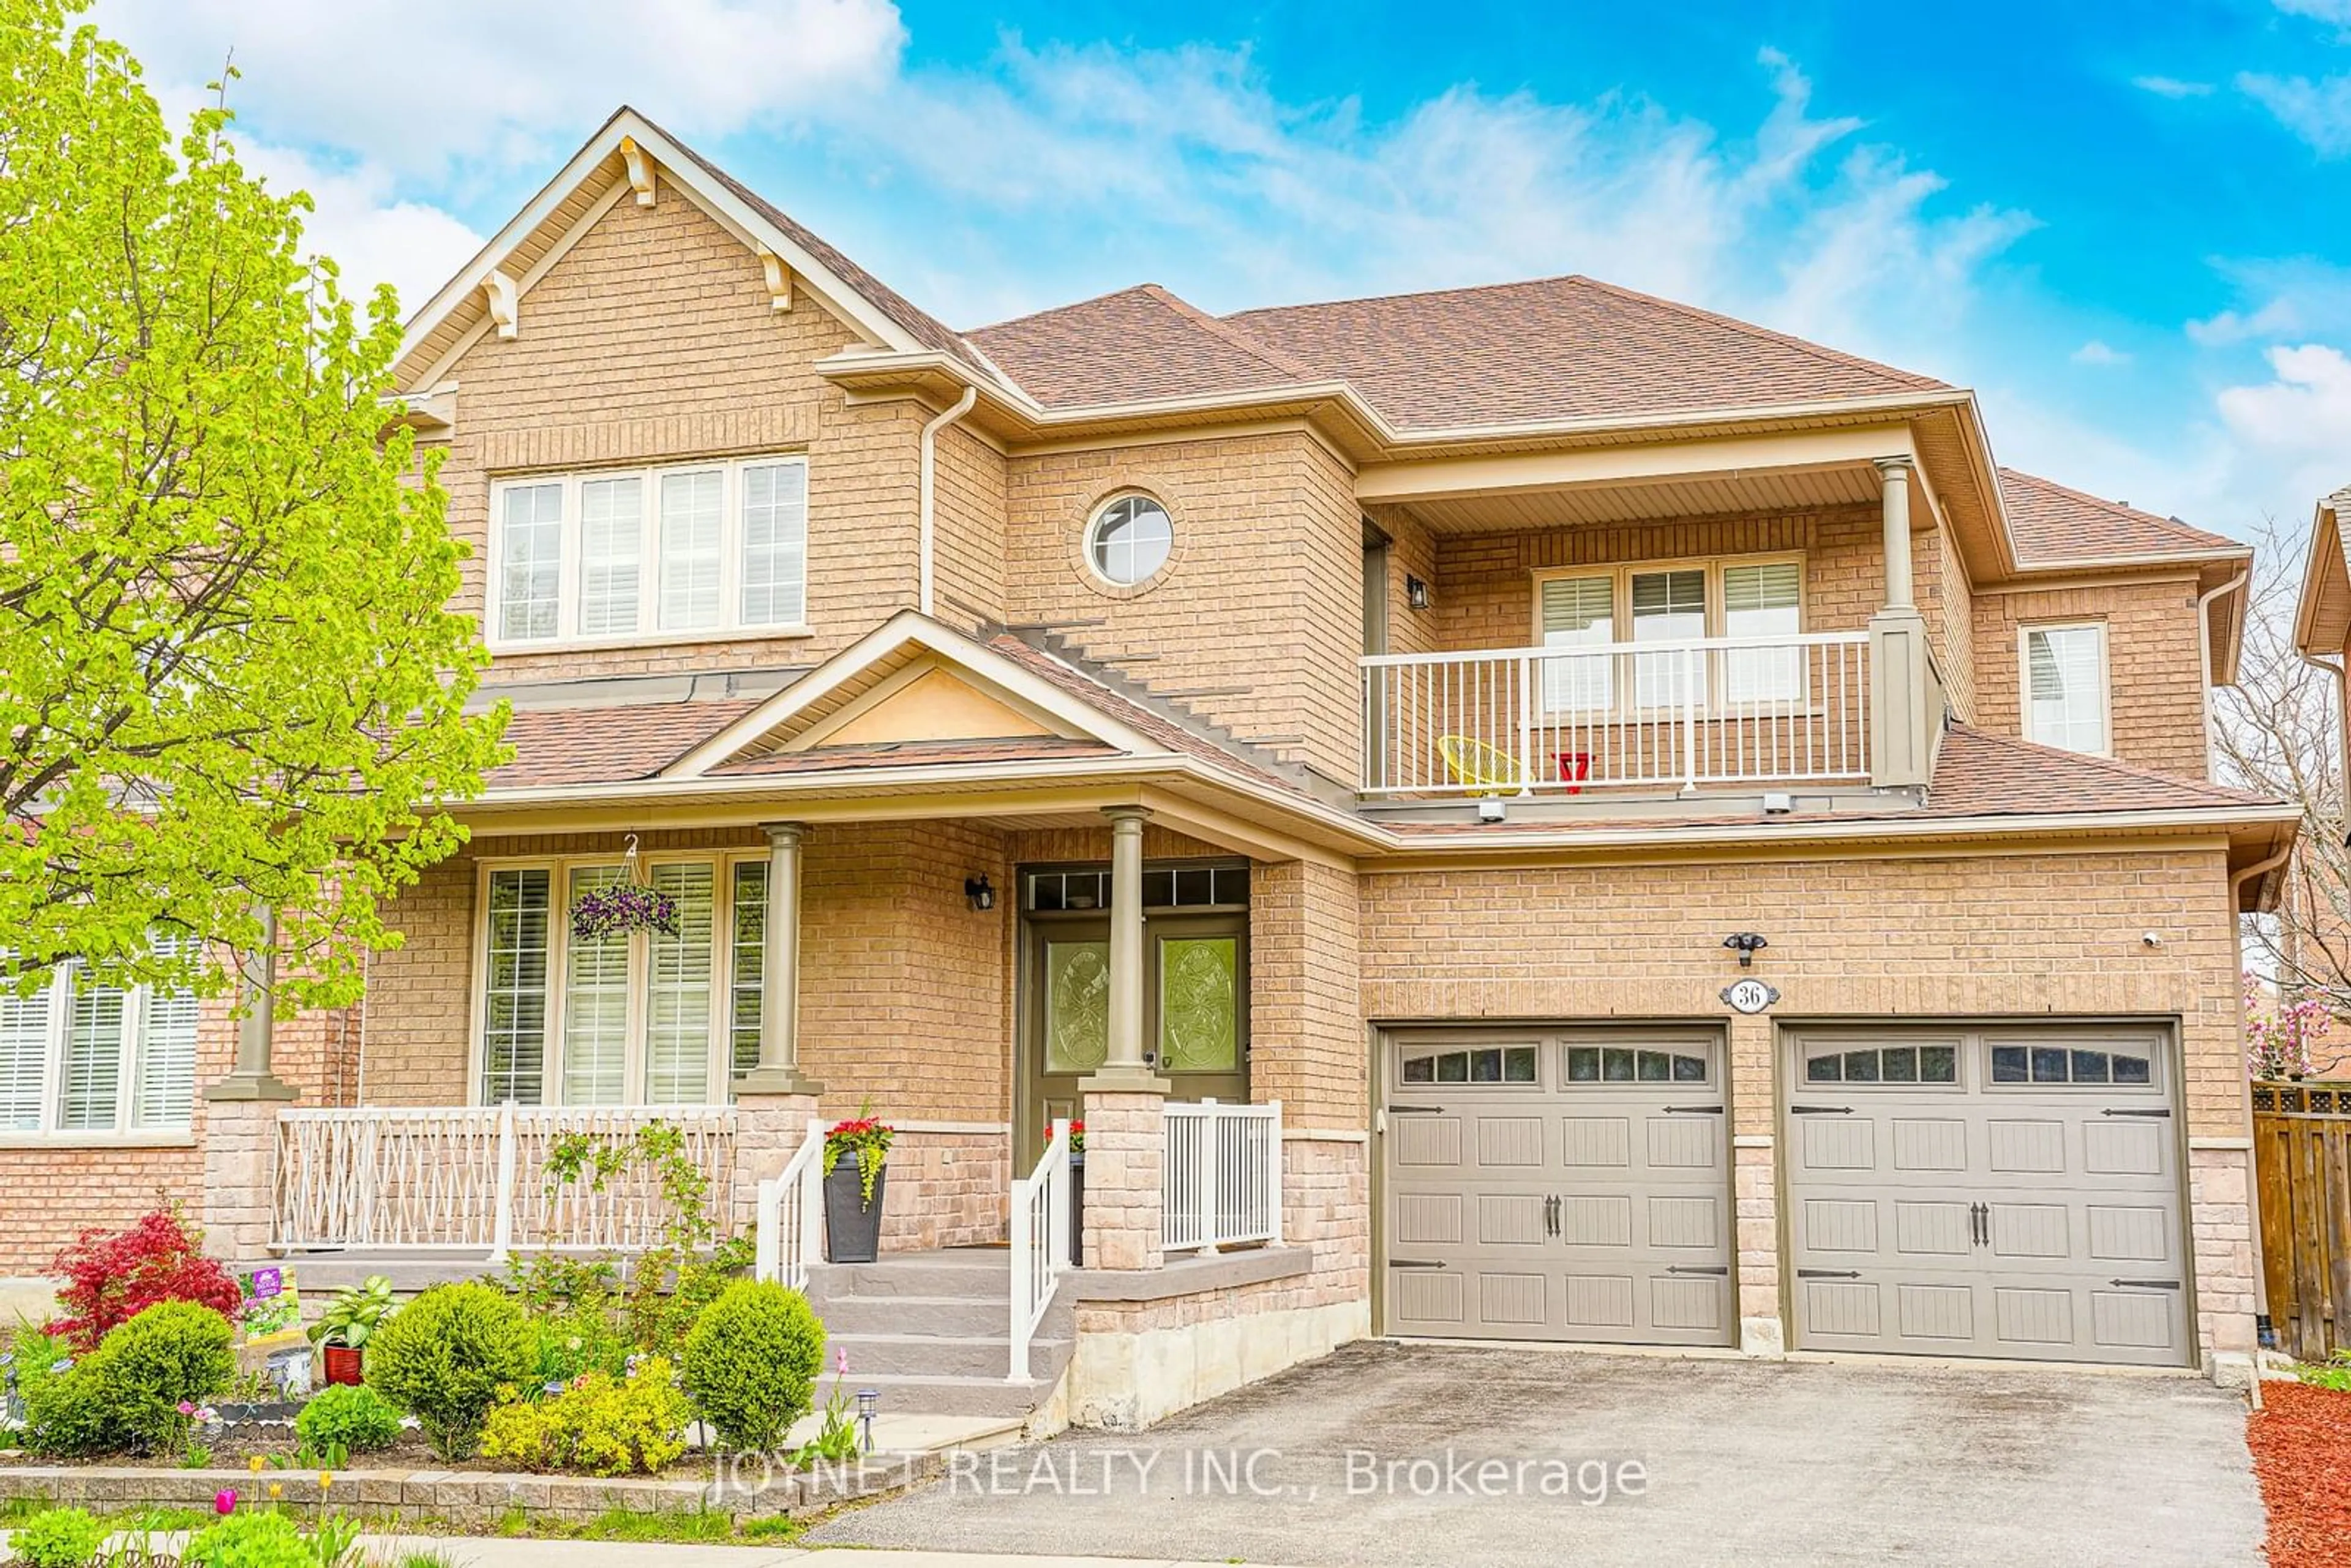 Home with brick exterior material for 36 Newbridge Ave, Richmond Hill Ontario L4E 3Z9